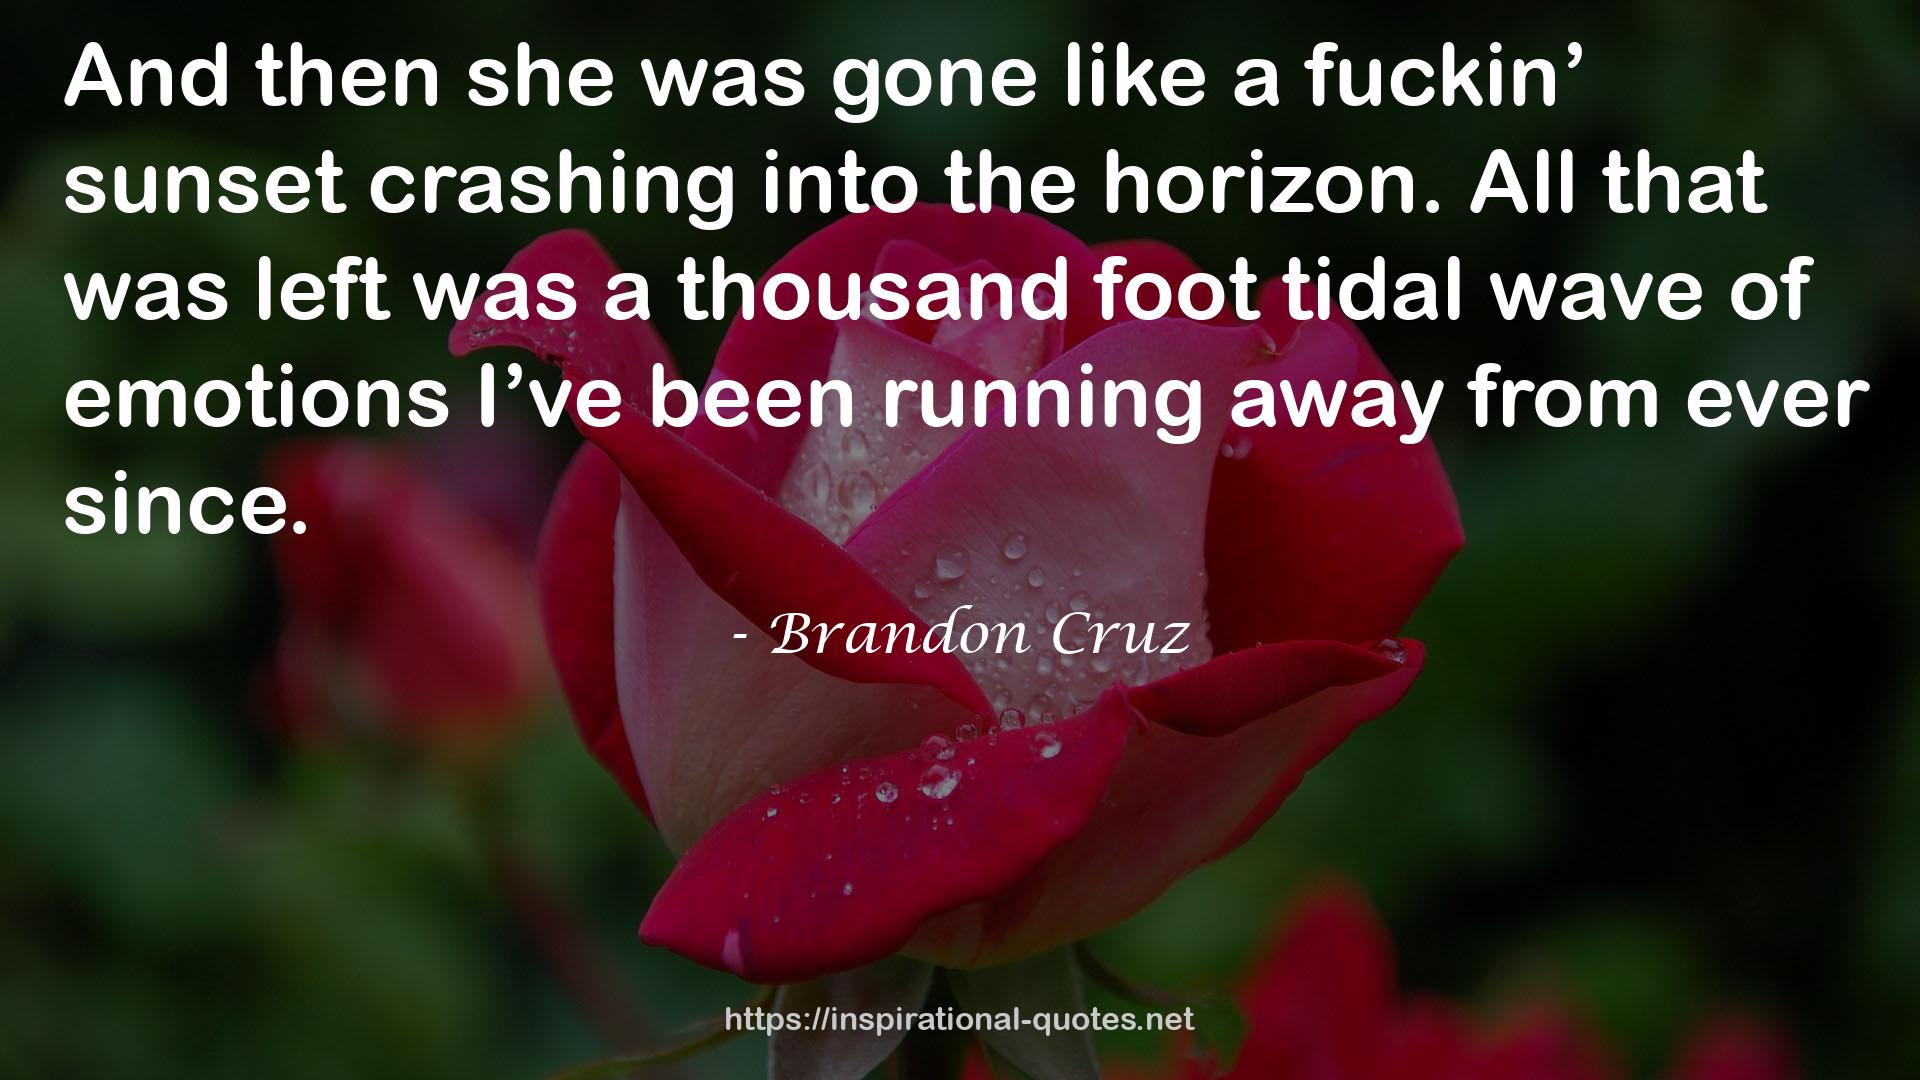 Brandon Cruz QUOTES